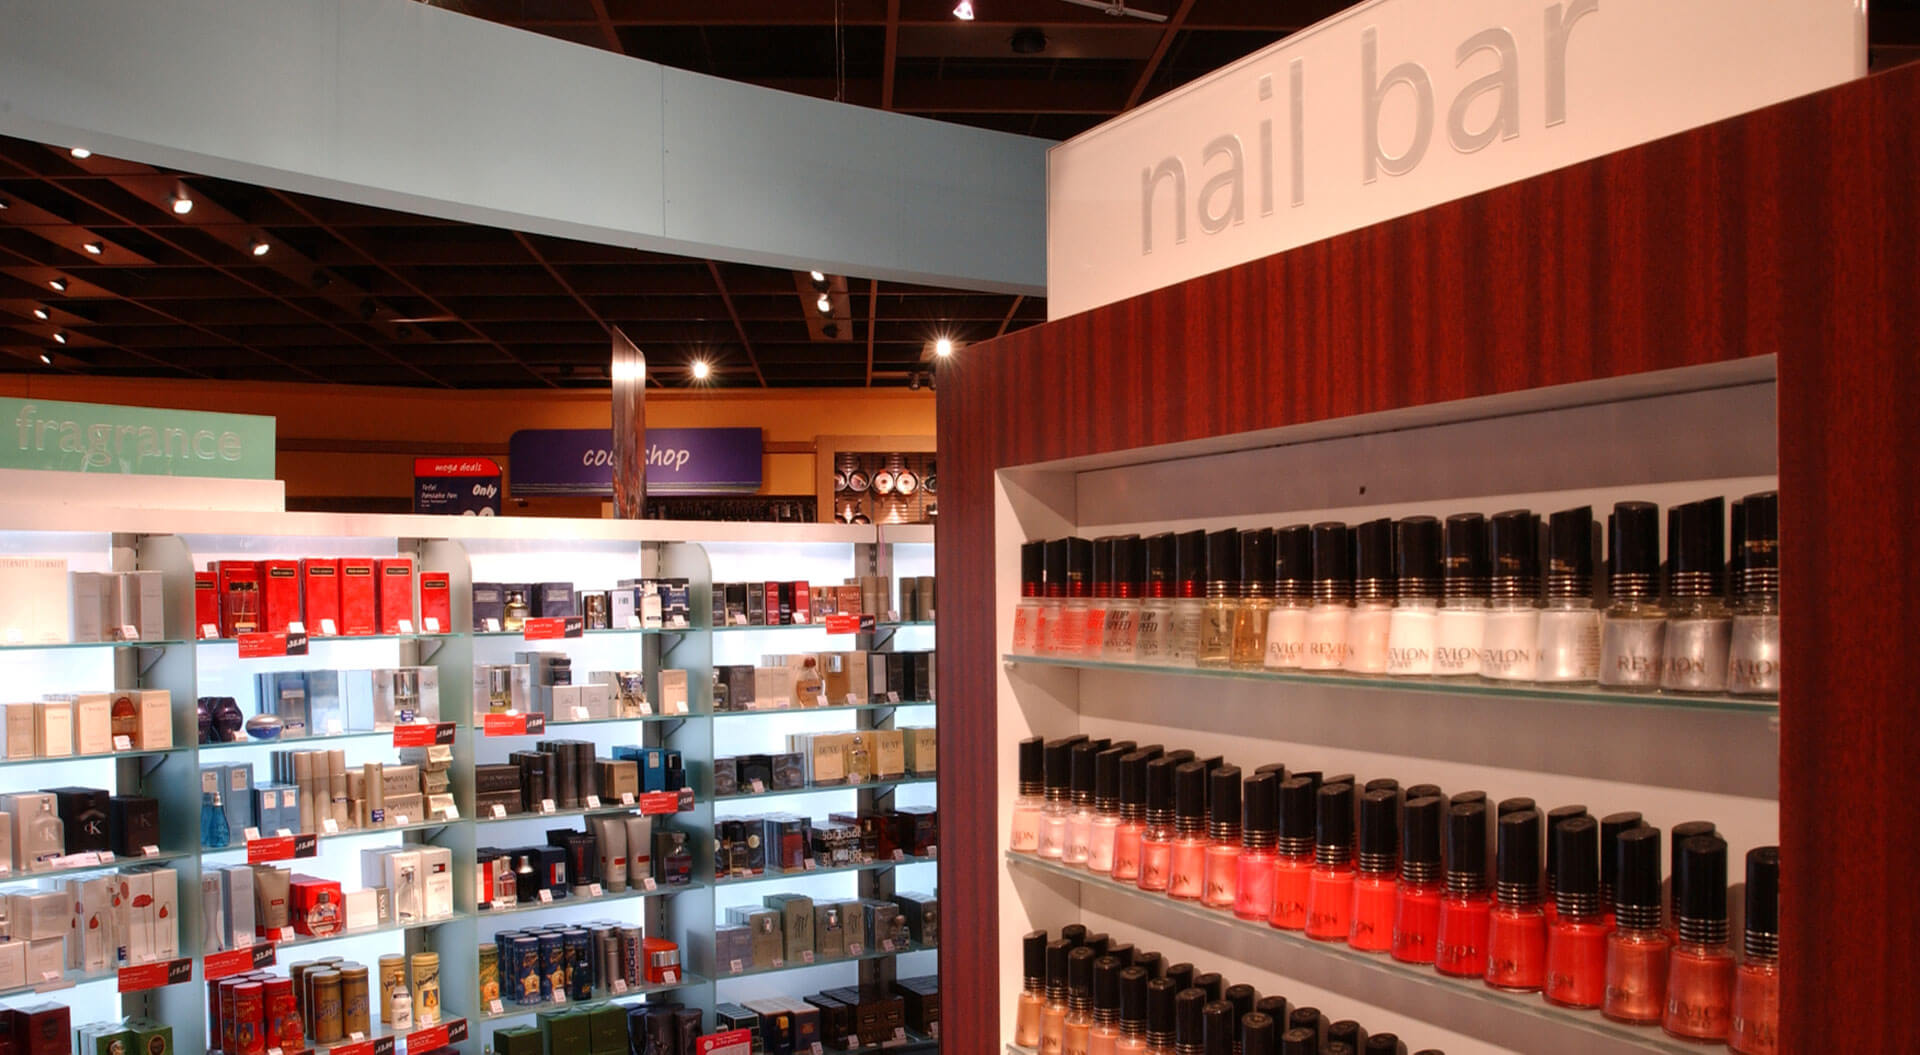 Safeway Mega store hypermarket health and beauty nail bar department merchanding display and grapghic branding